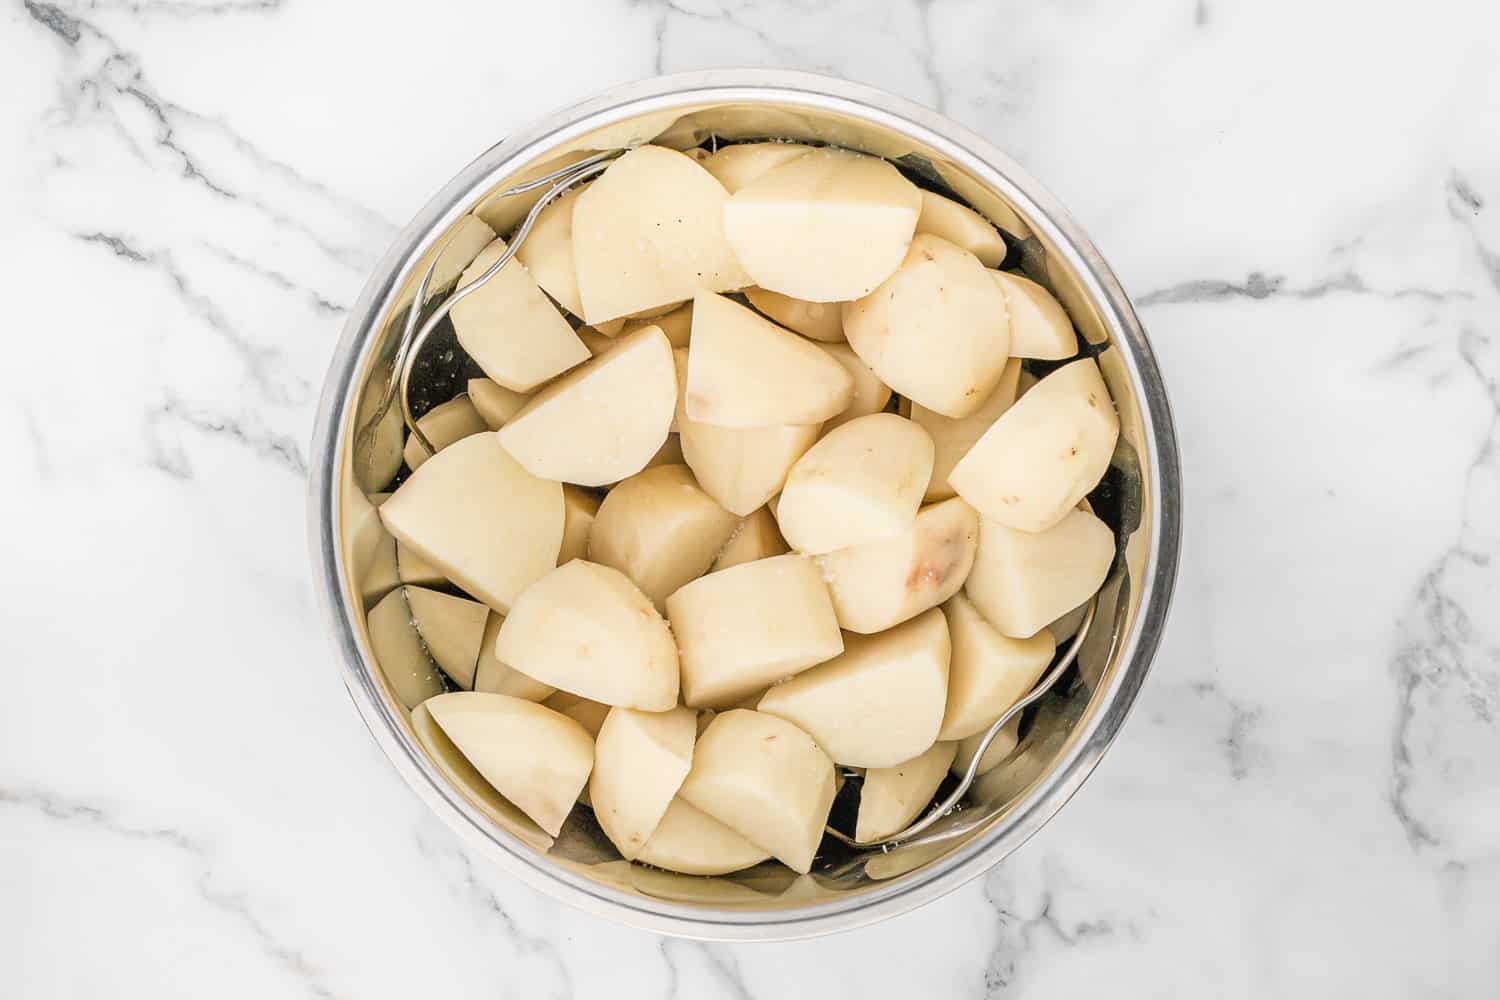 Uncooked potatoes in instant pot.